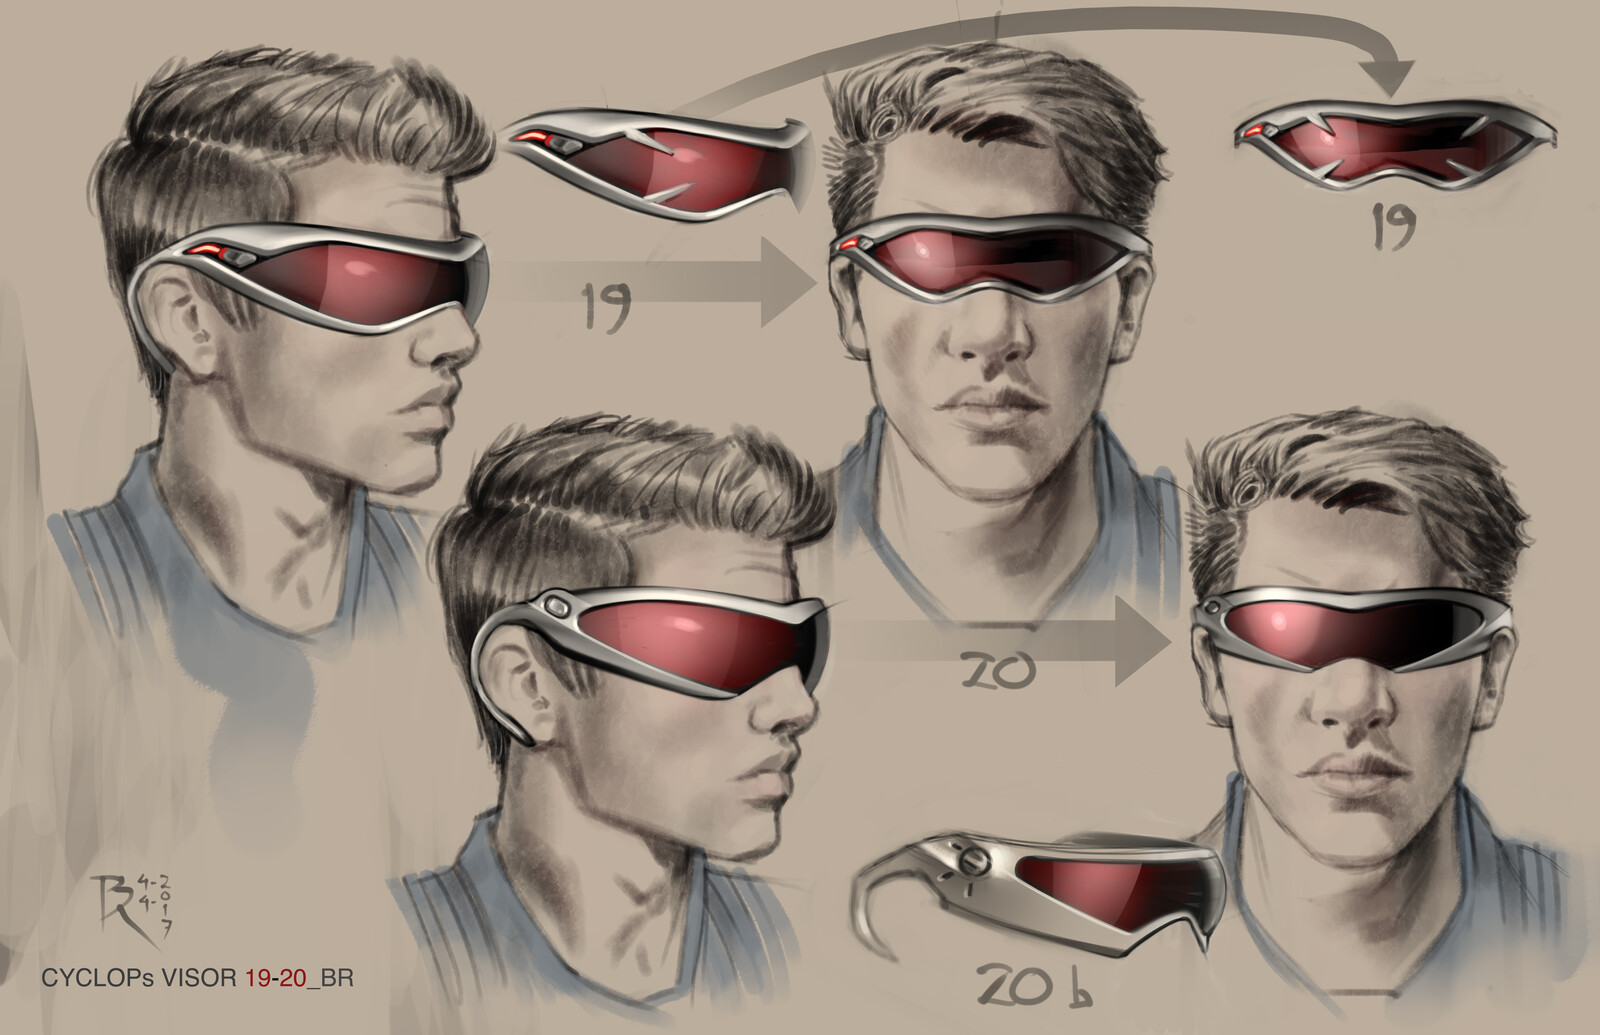 Cyclops' Visor 19-20